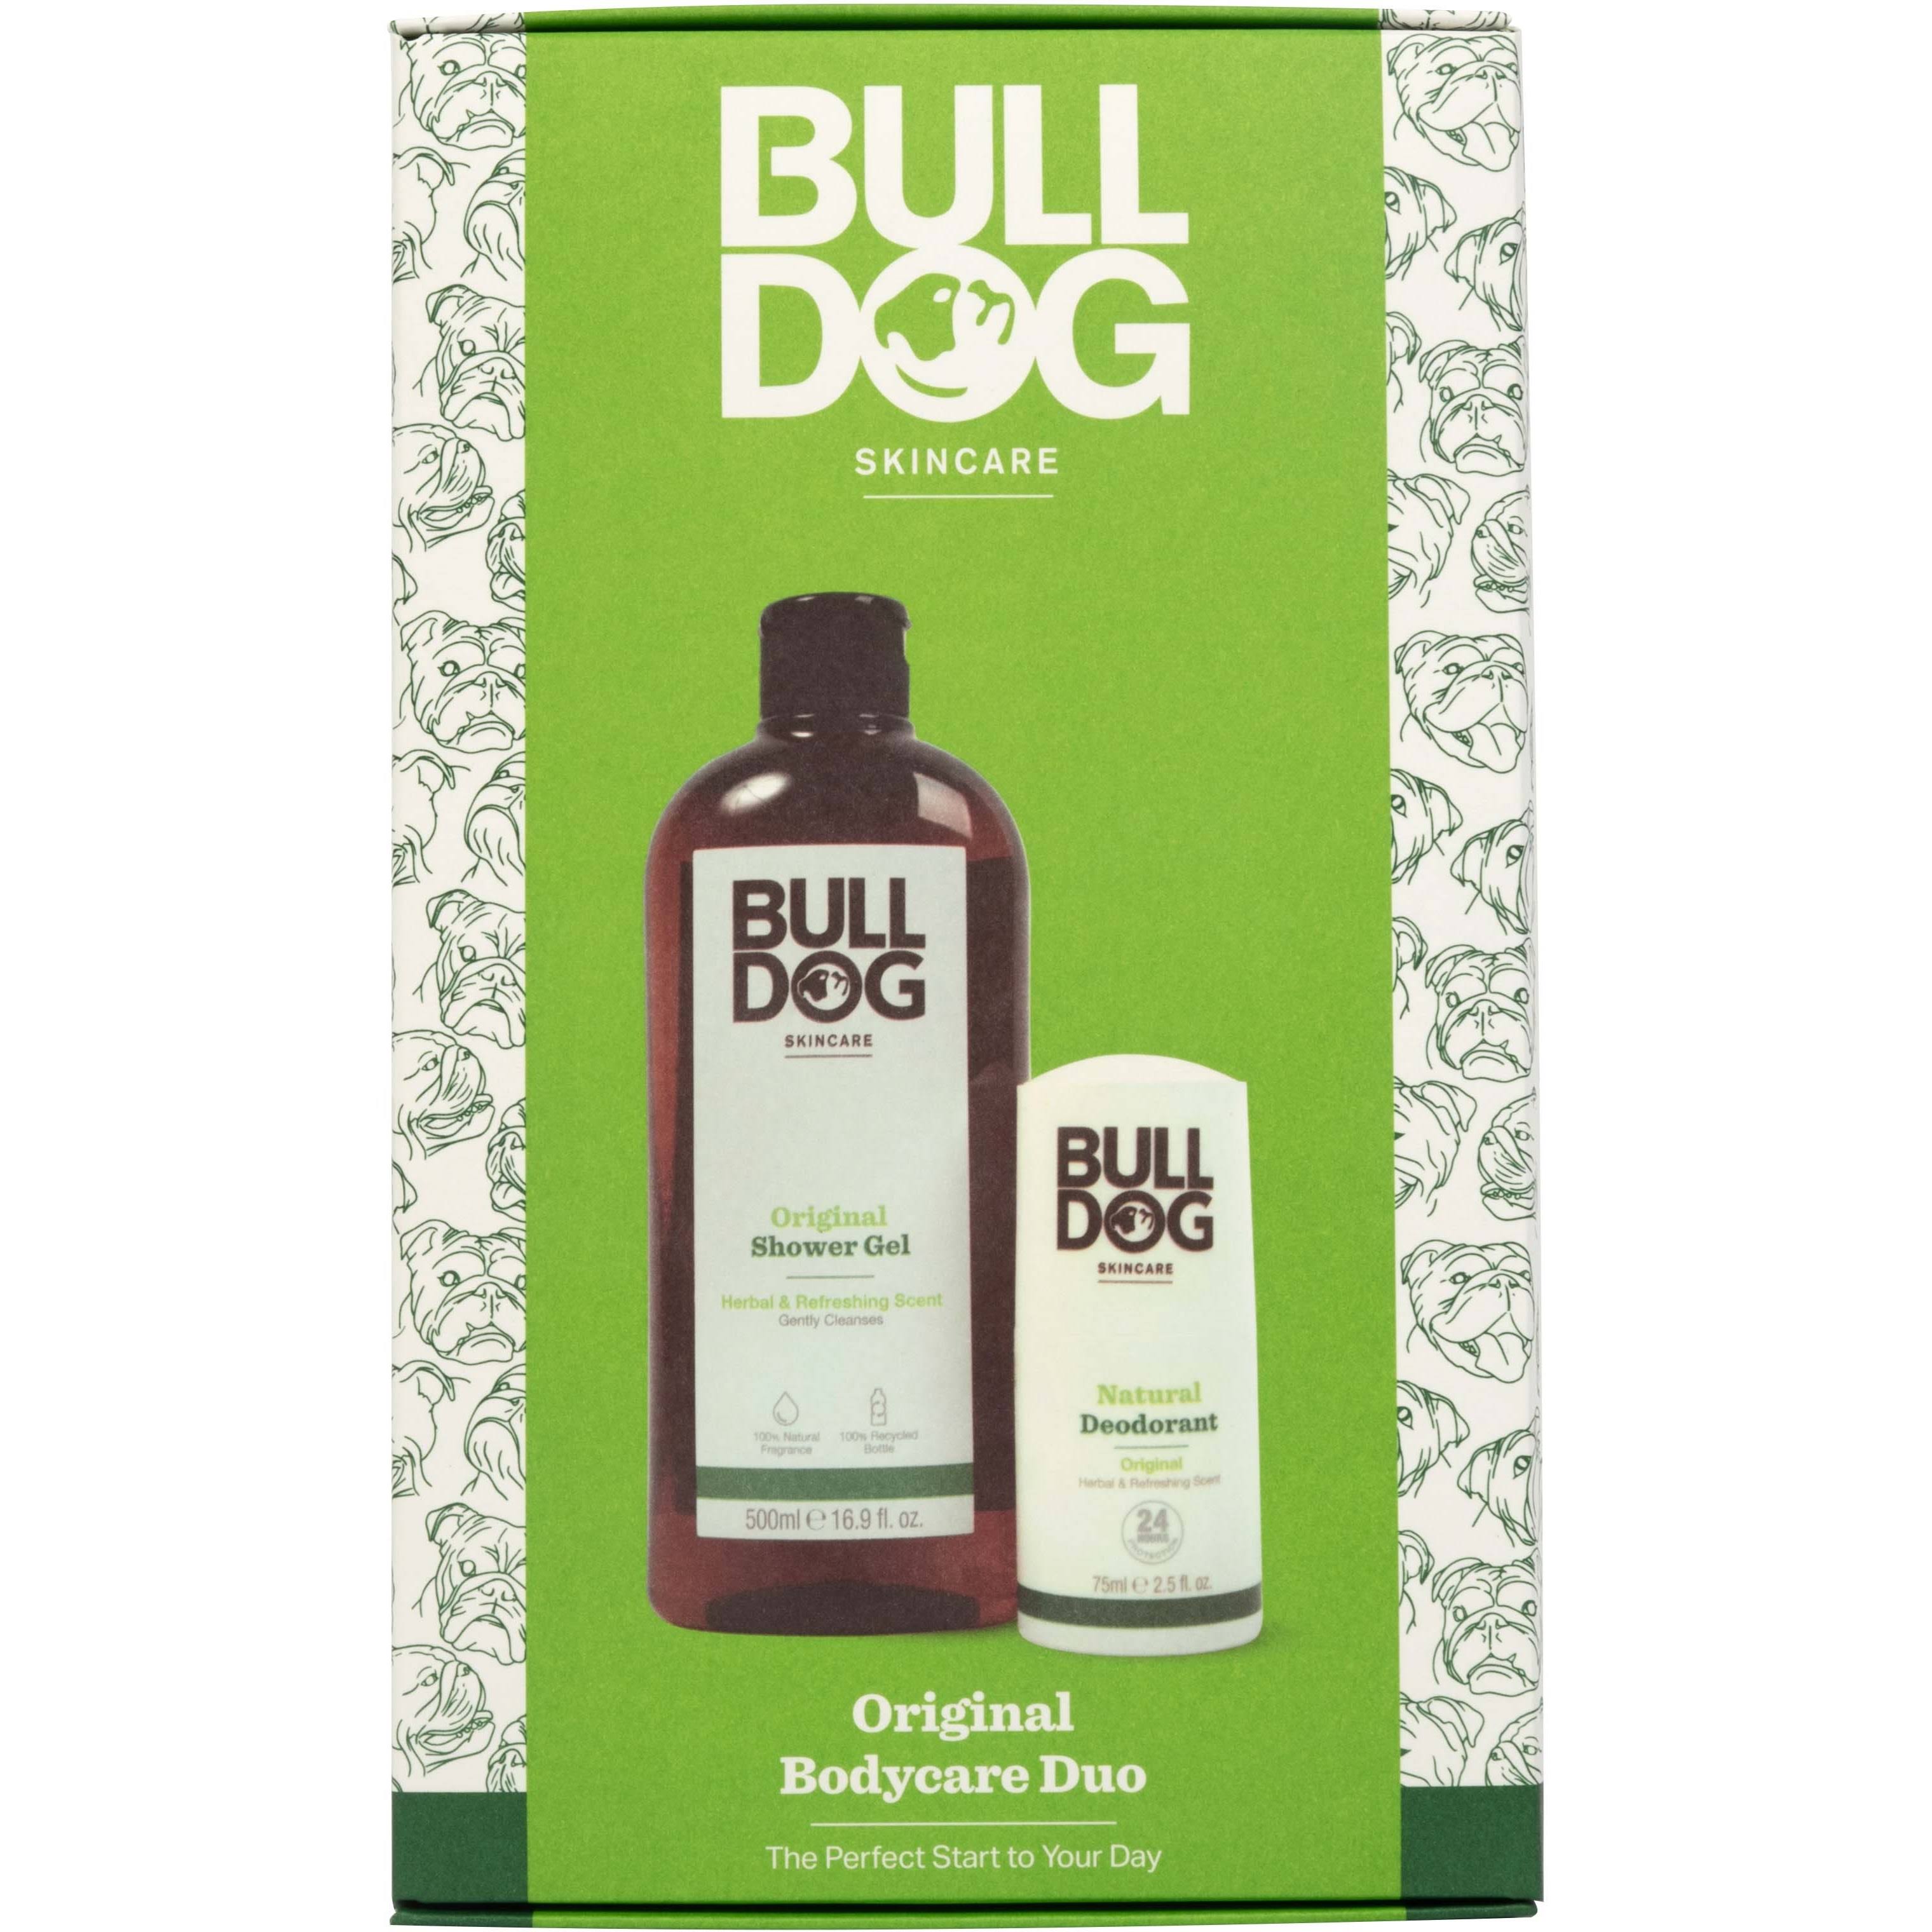 Bulldog Body Care Duo Original 2 Piece Gift Set with Shower Gel and Deodorant